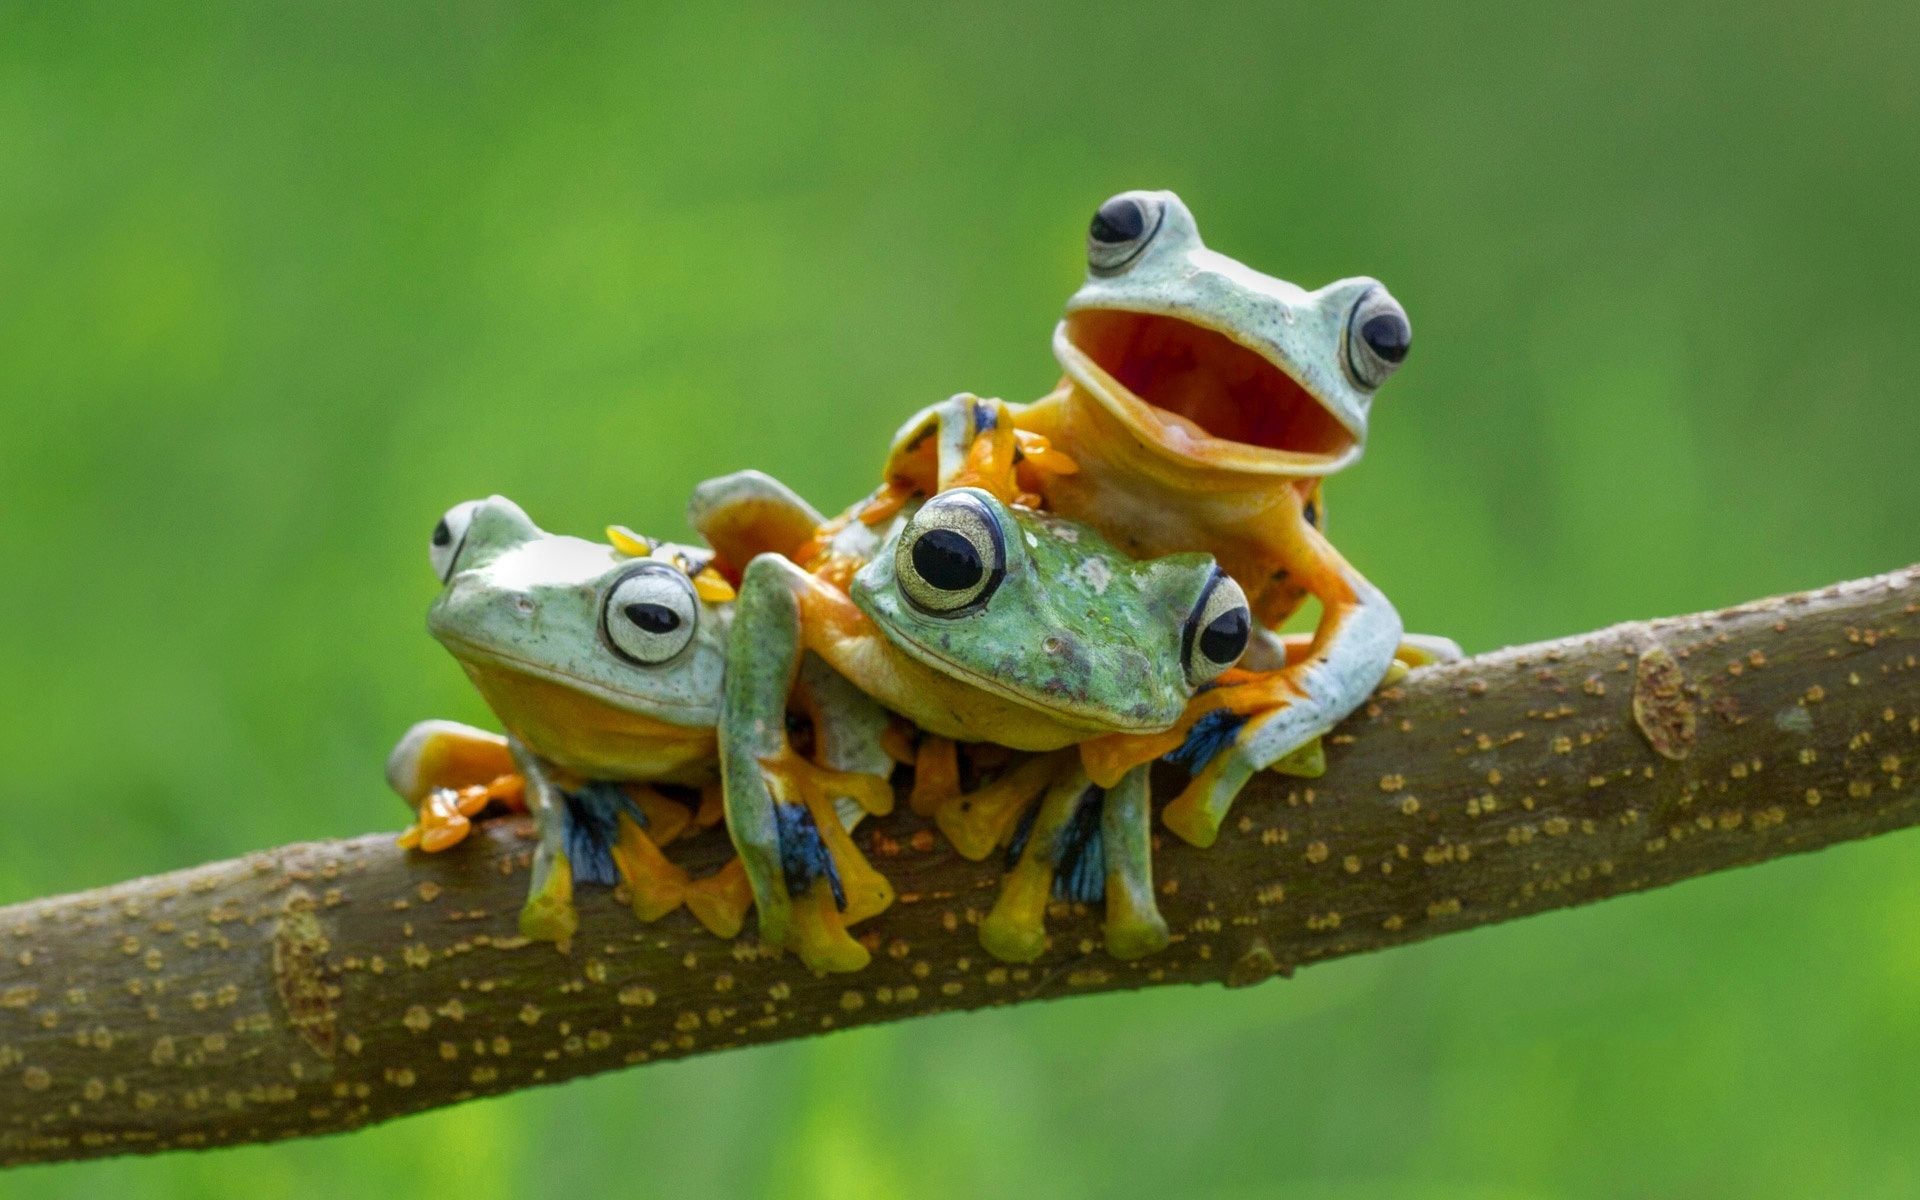 cute frog ipad wallpaper